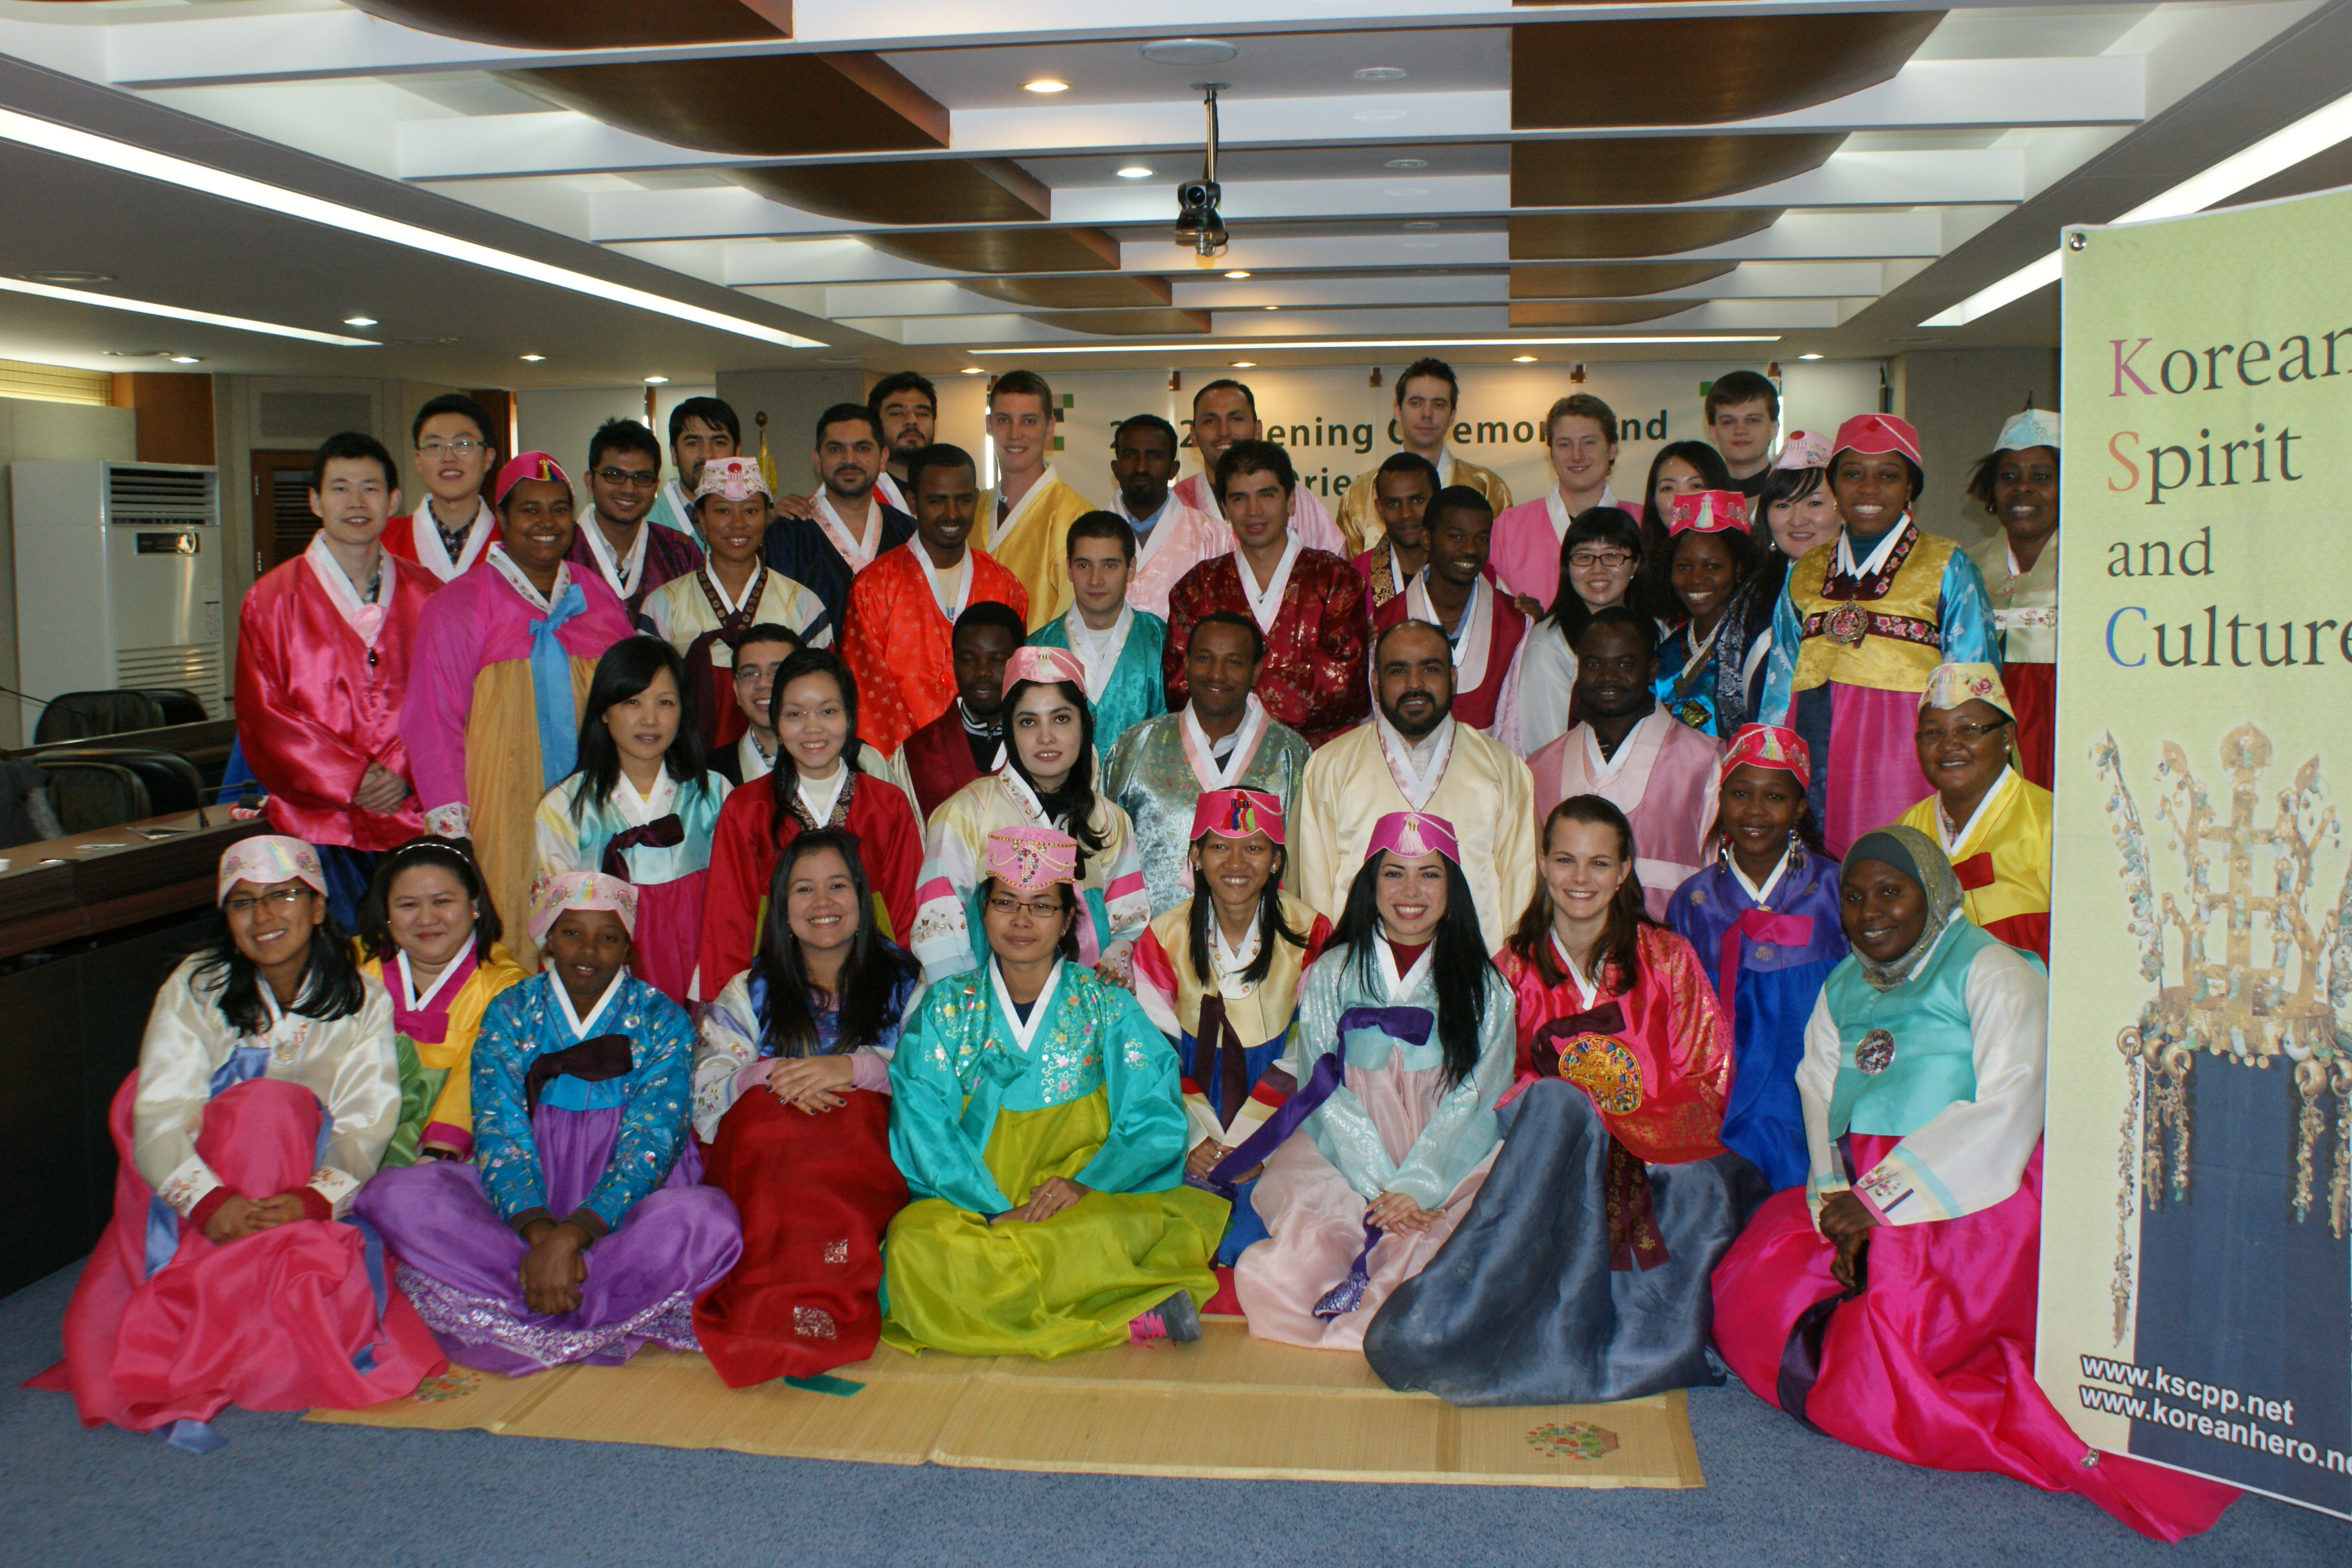 The Korean Spirit and Culture